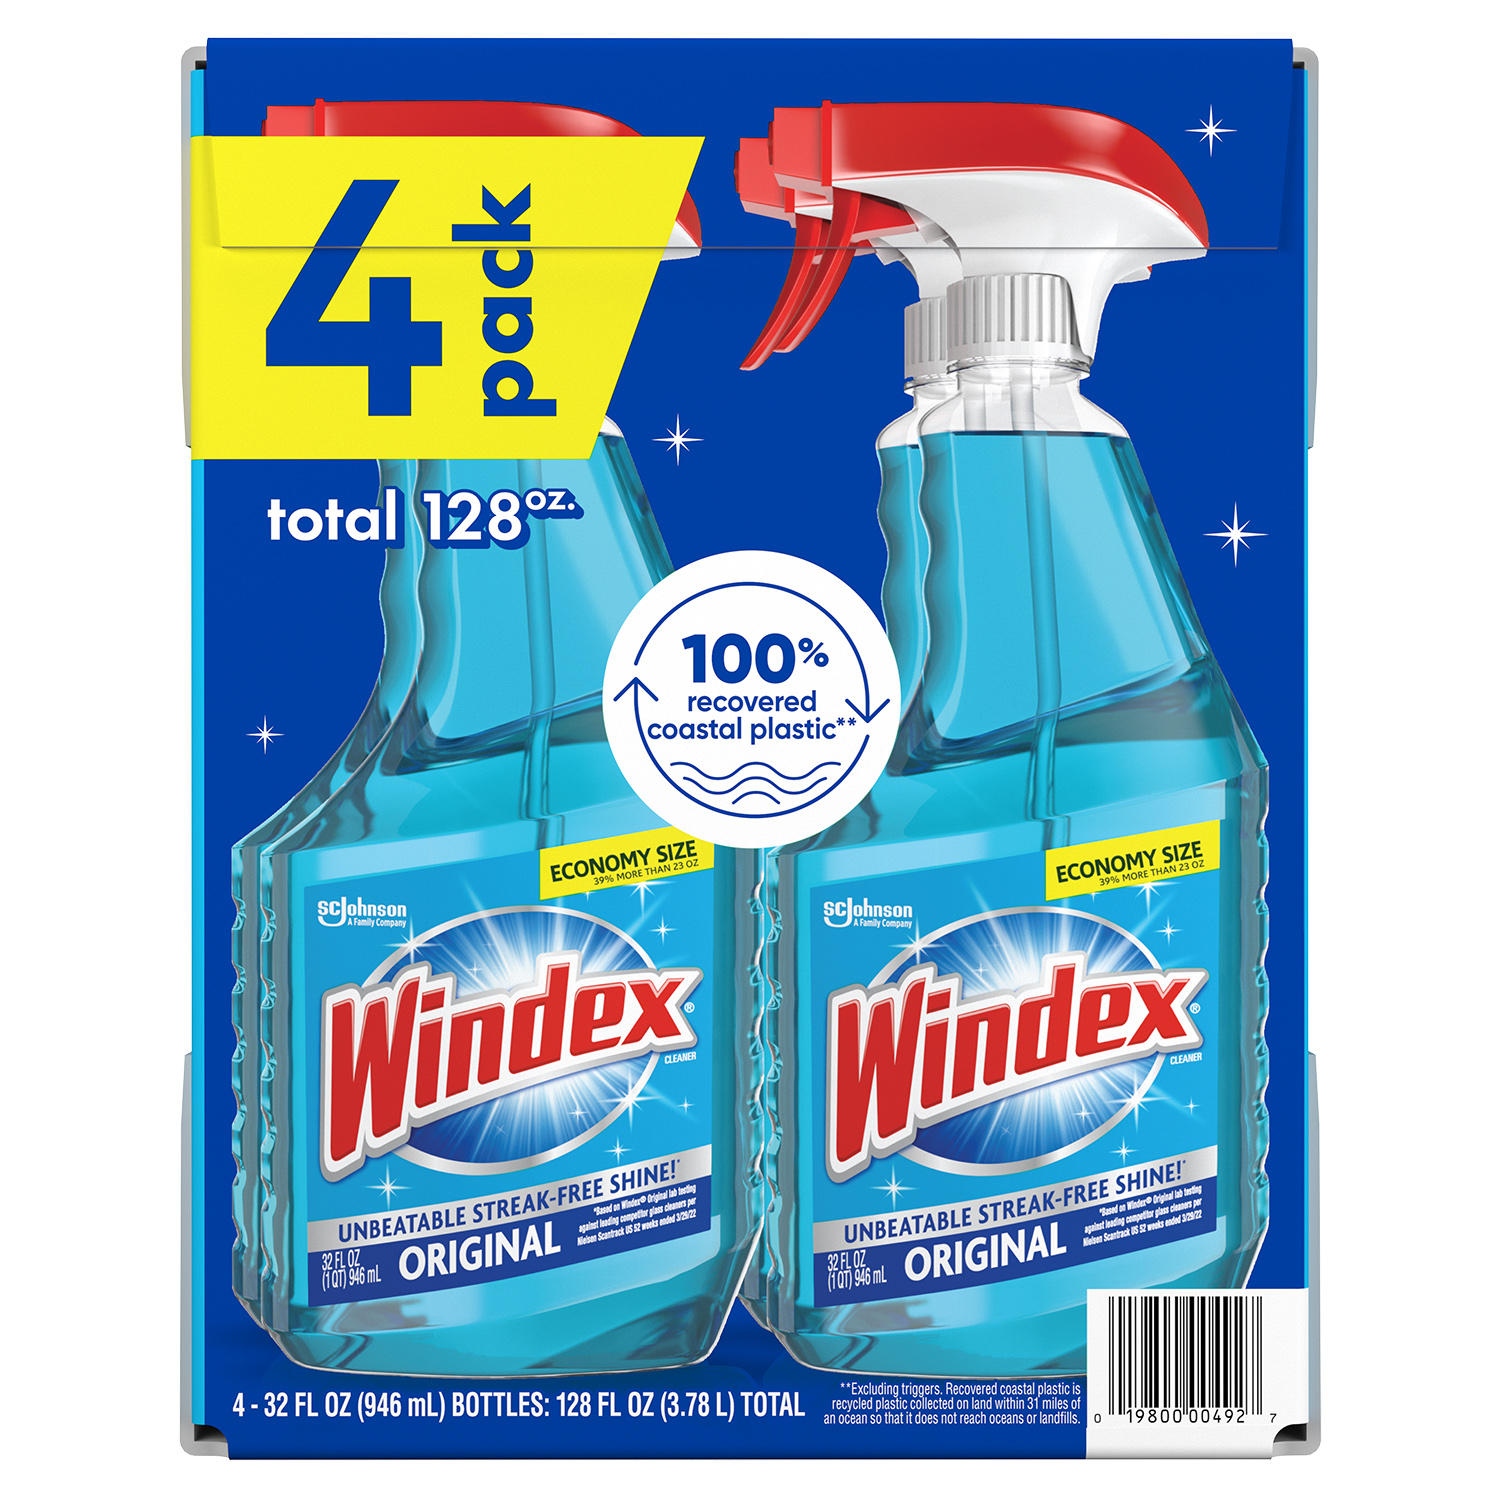 Windex Original Glass Cleaner 4x32 oz bottles, 128 oz Total